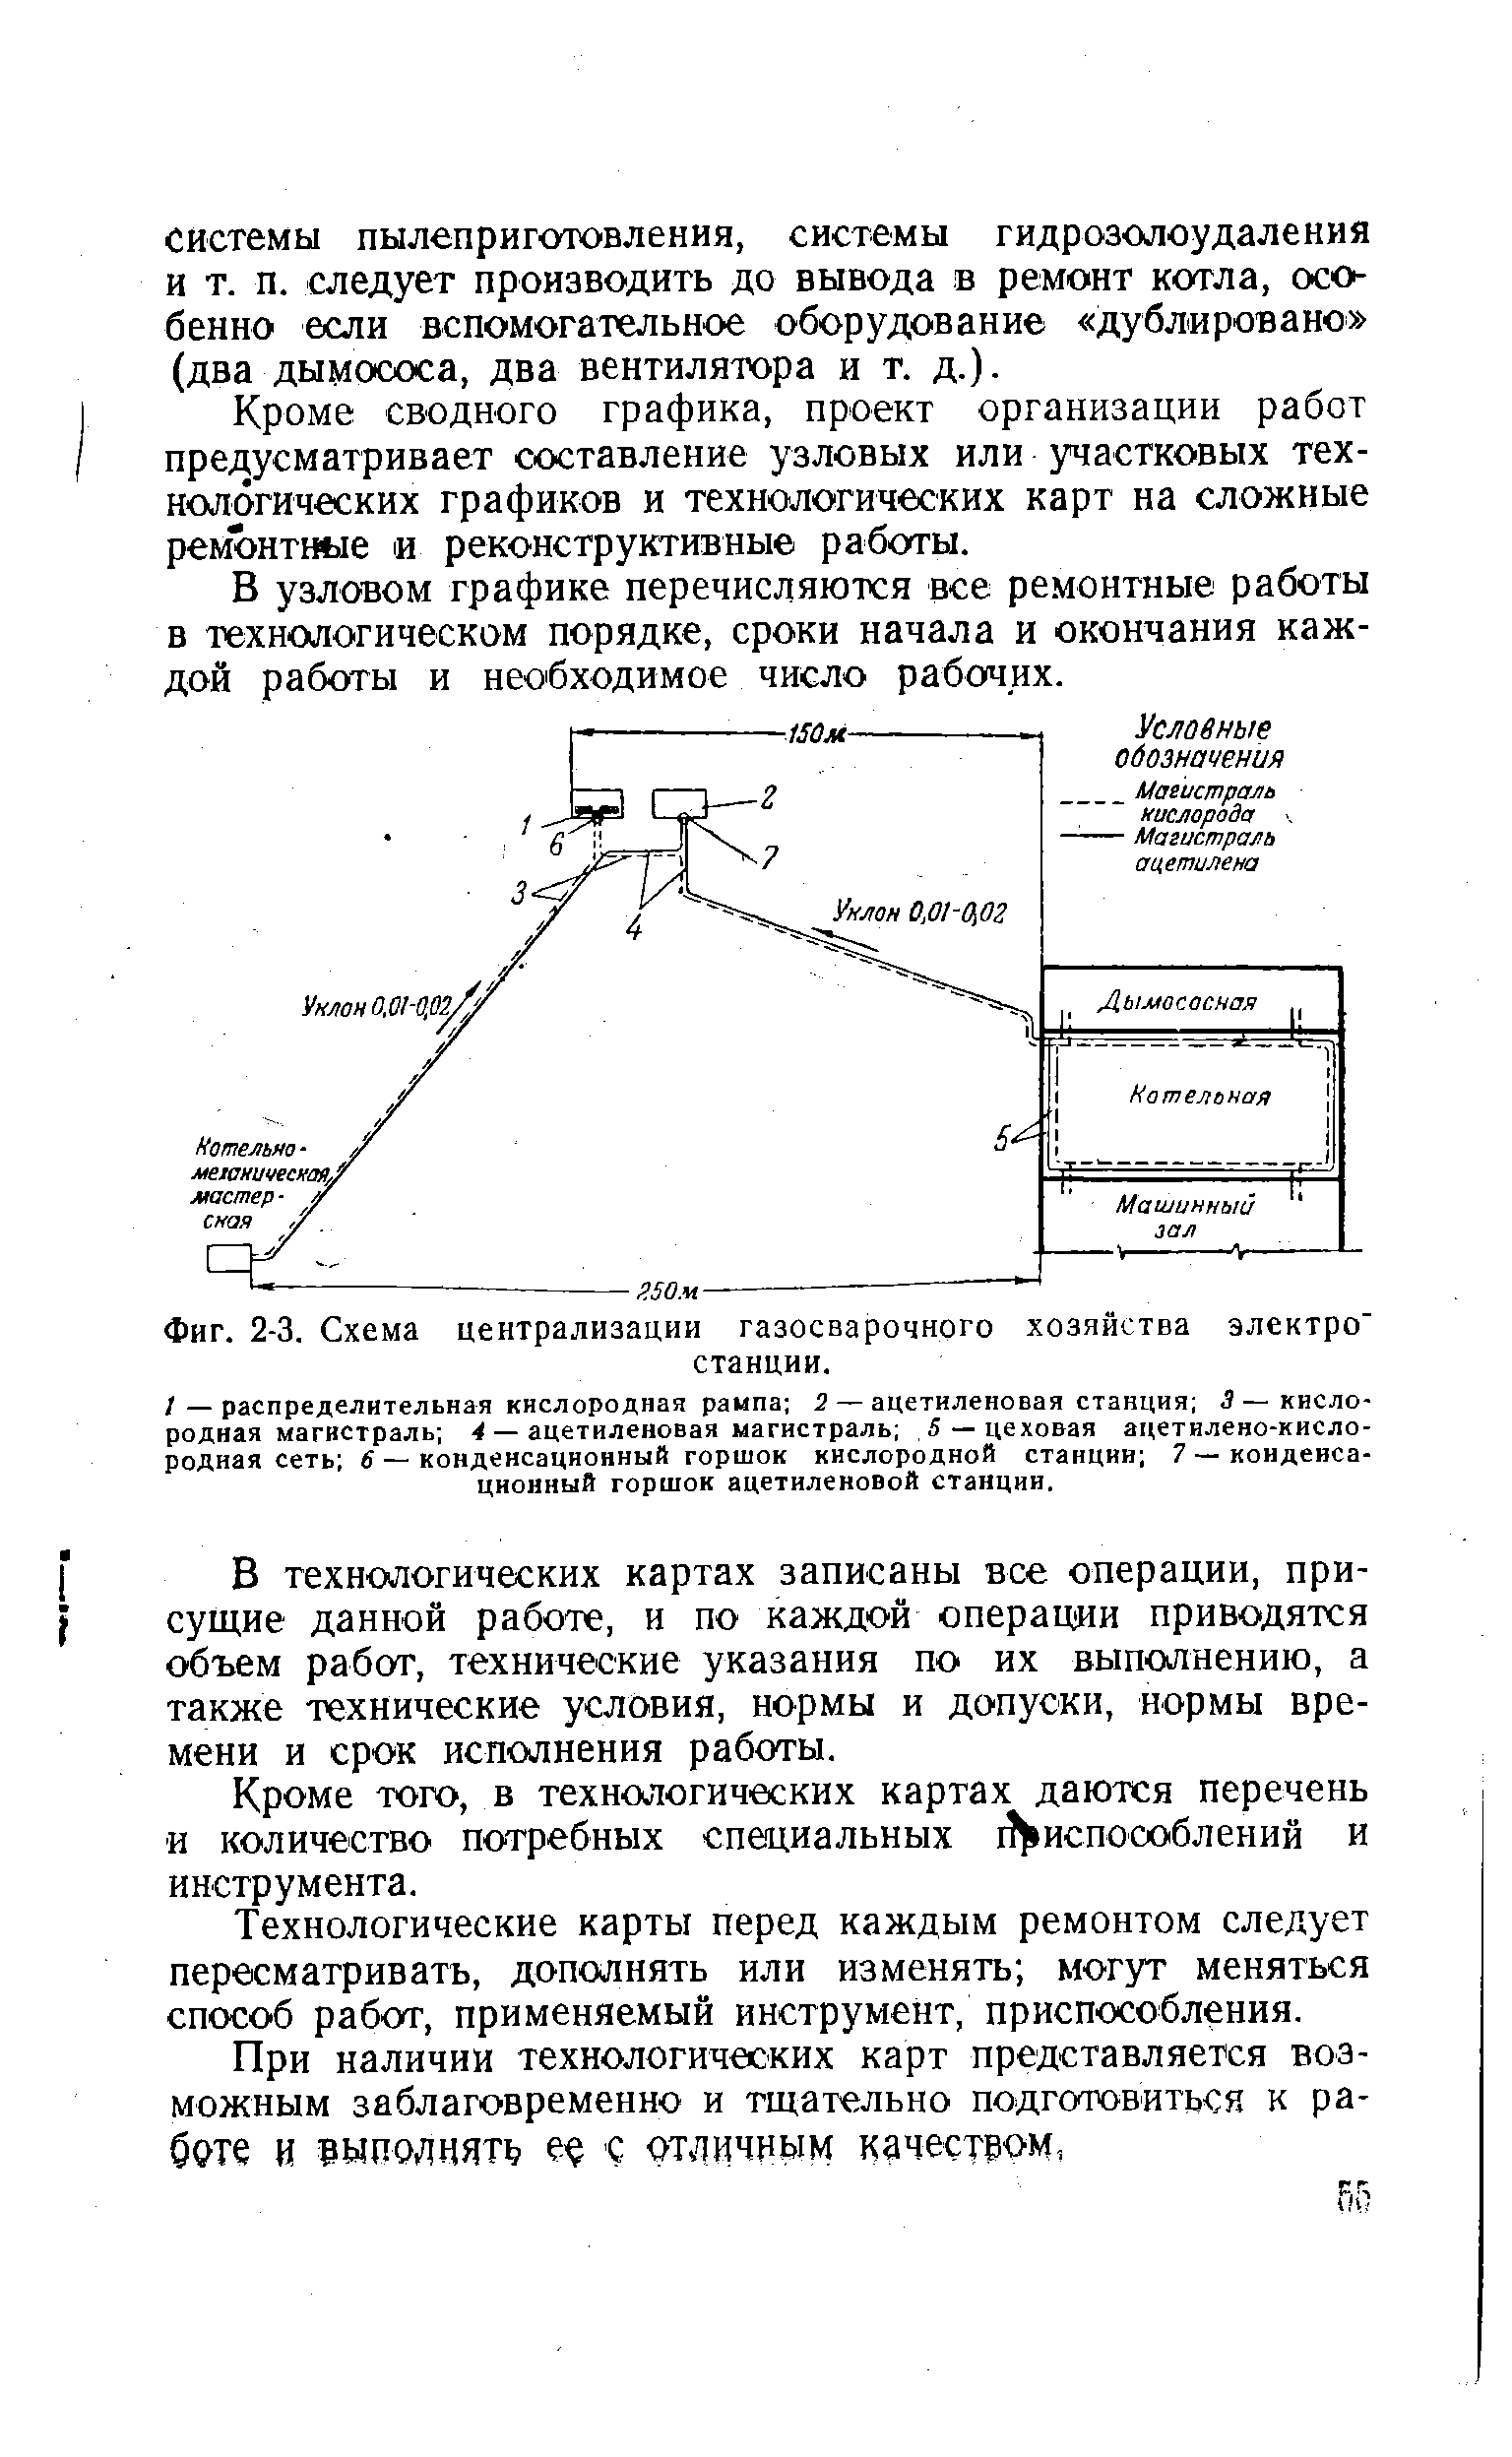 Фиг. 2-3, Схема централизации газосварочного хозяйства электро"
